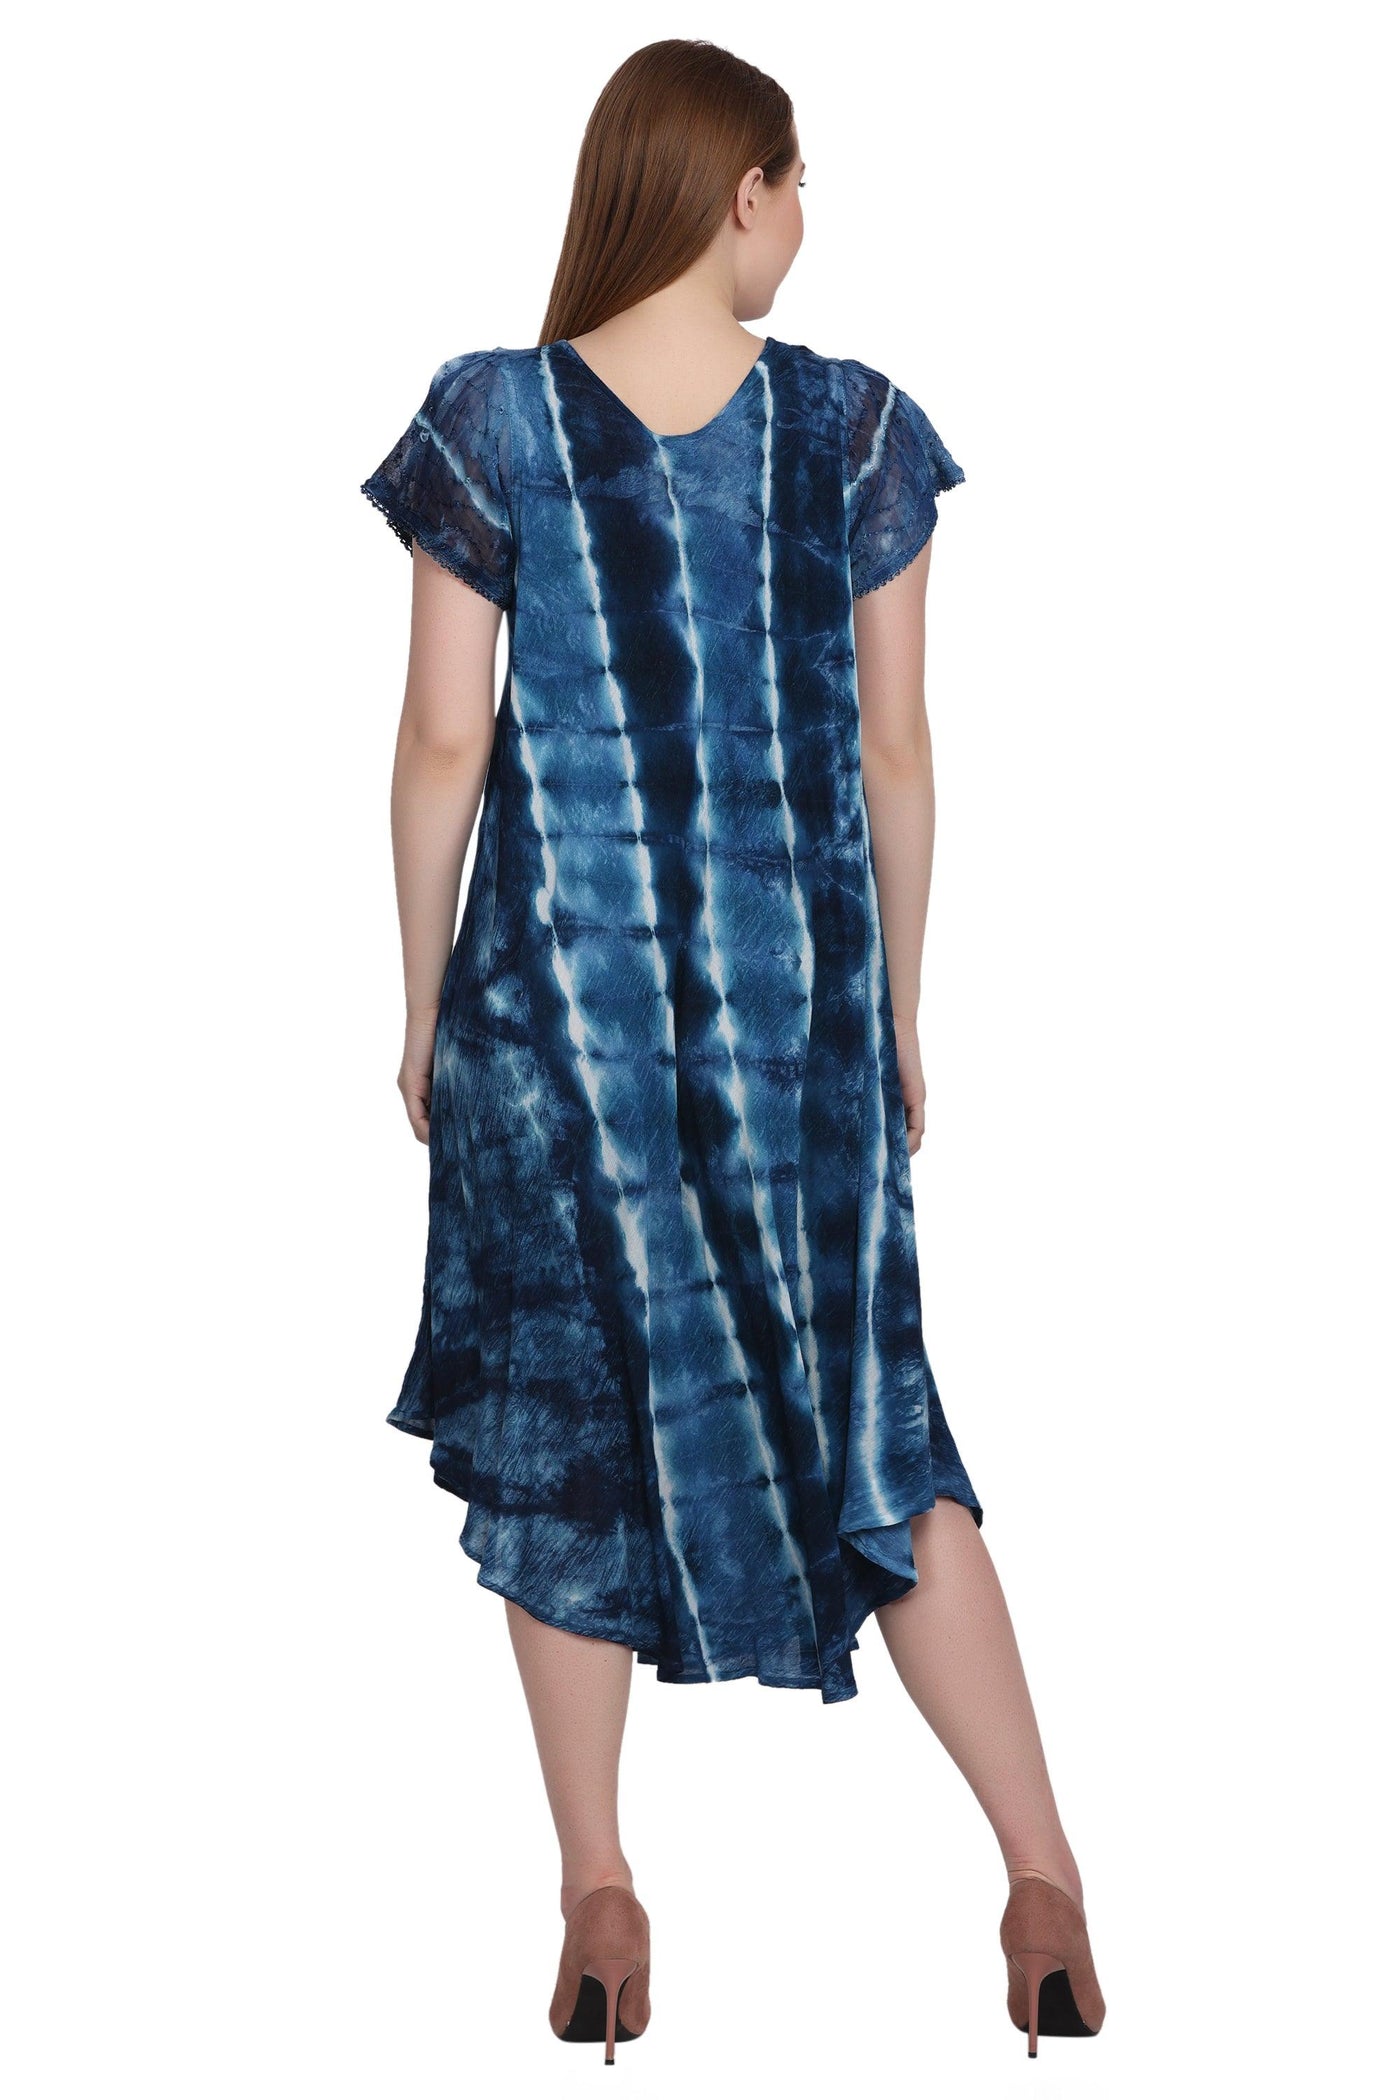 Cap Sleeve Tie Dye Dress 522185-SLV  - Advance Apparels Inc